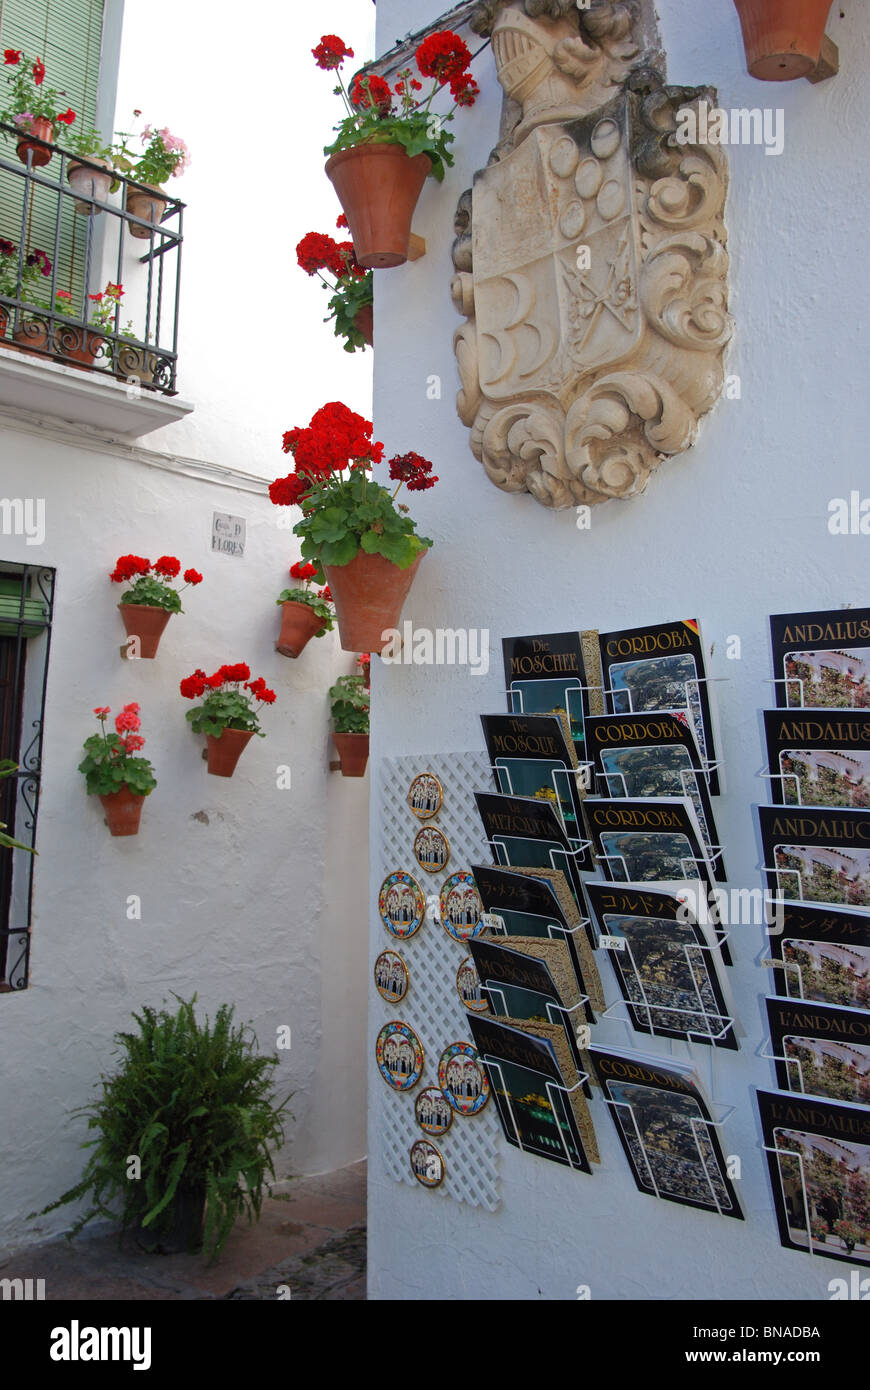 Calle de las flores cordoba hi-res stock photography and images - Alamy